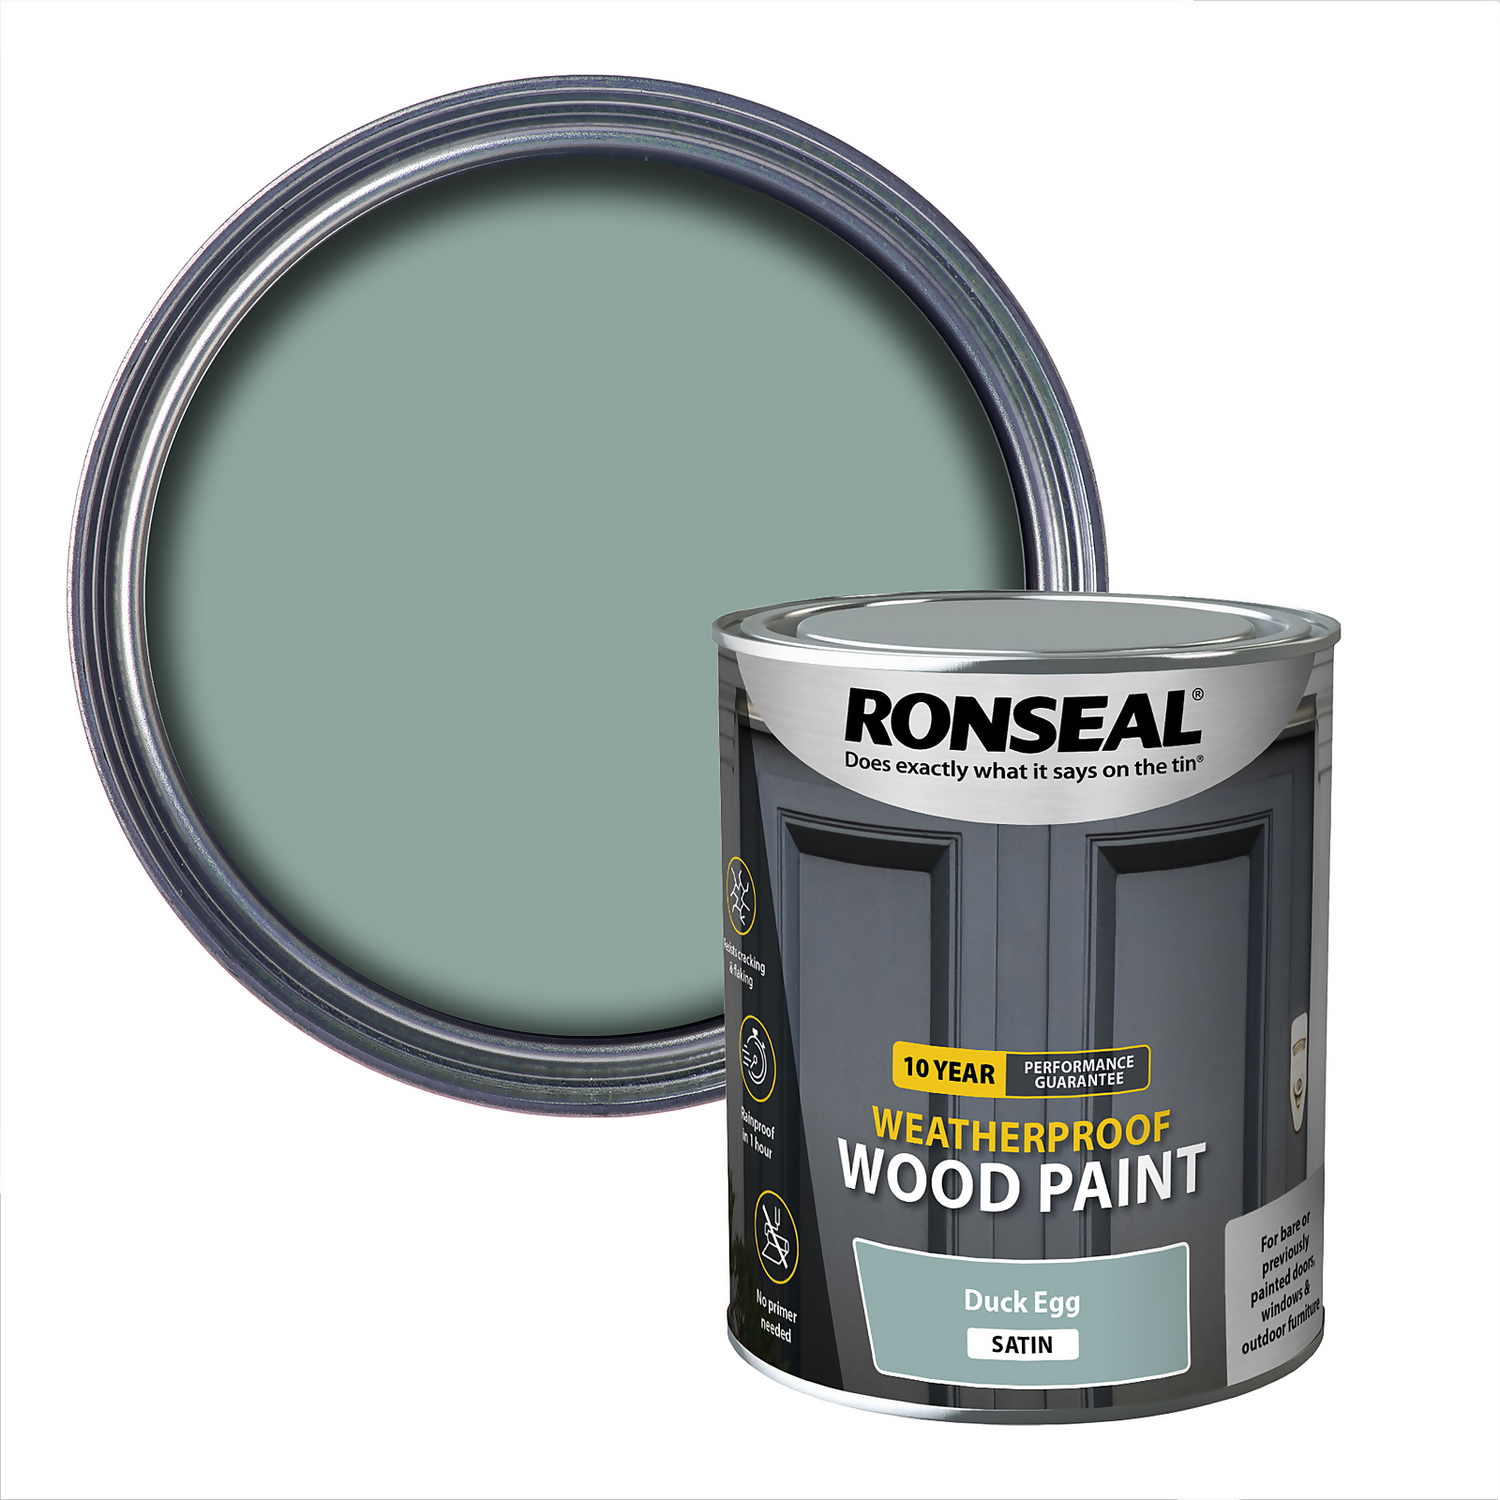 Ronseal 10 Year Weatherproof Wood Paint Duck Egg Satin - 750ml | Homebase